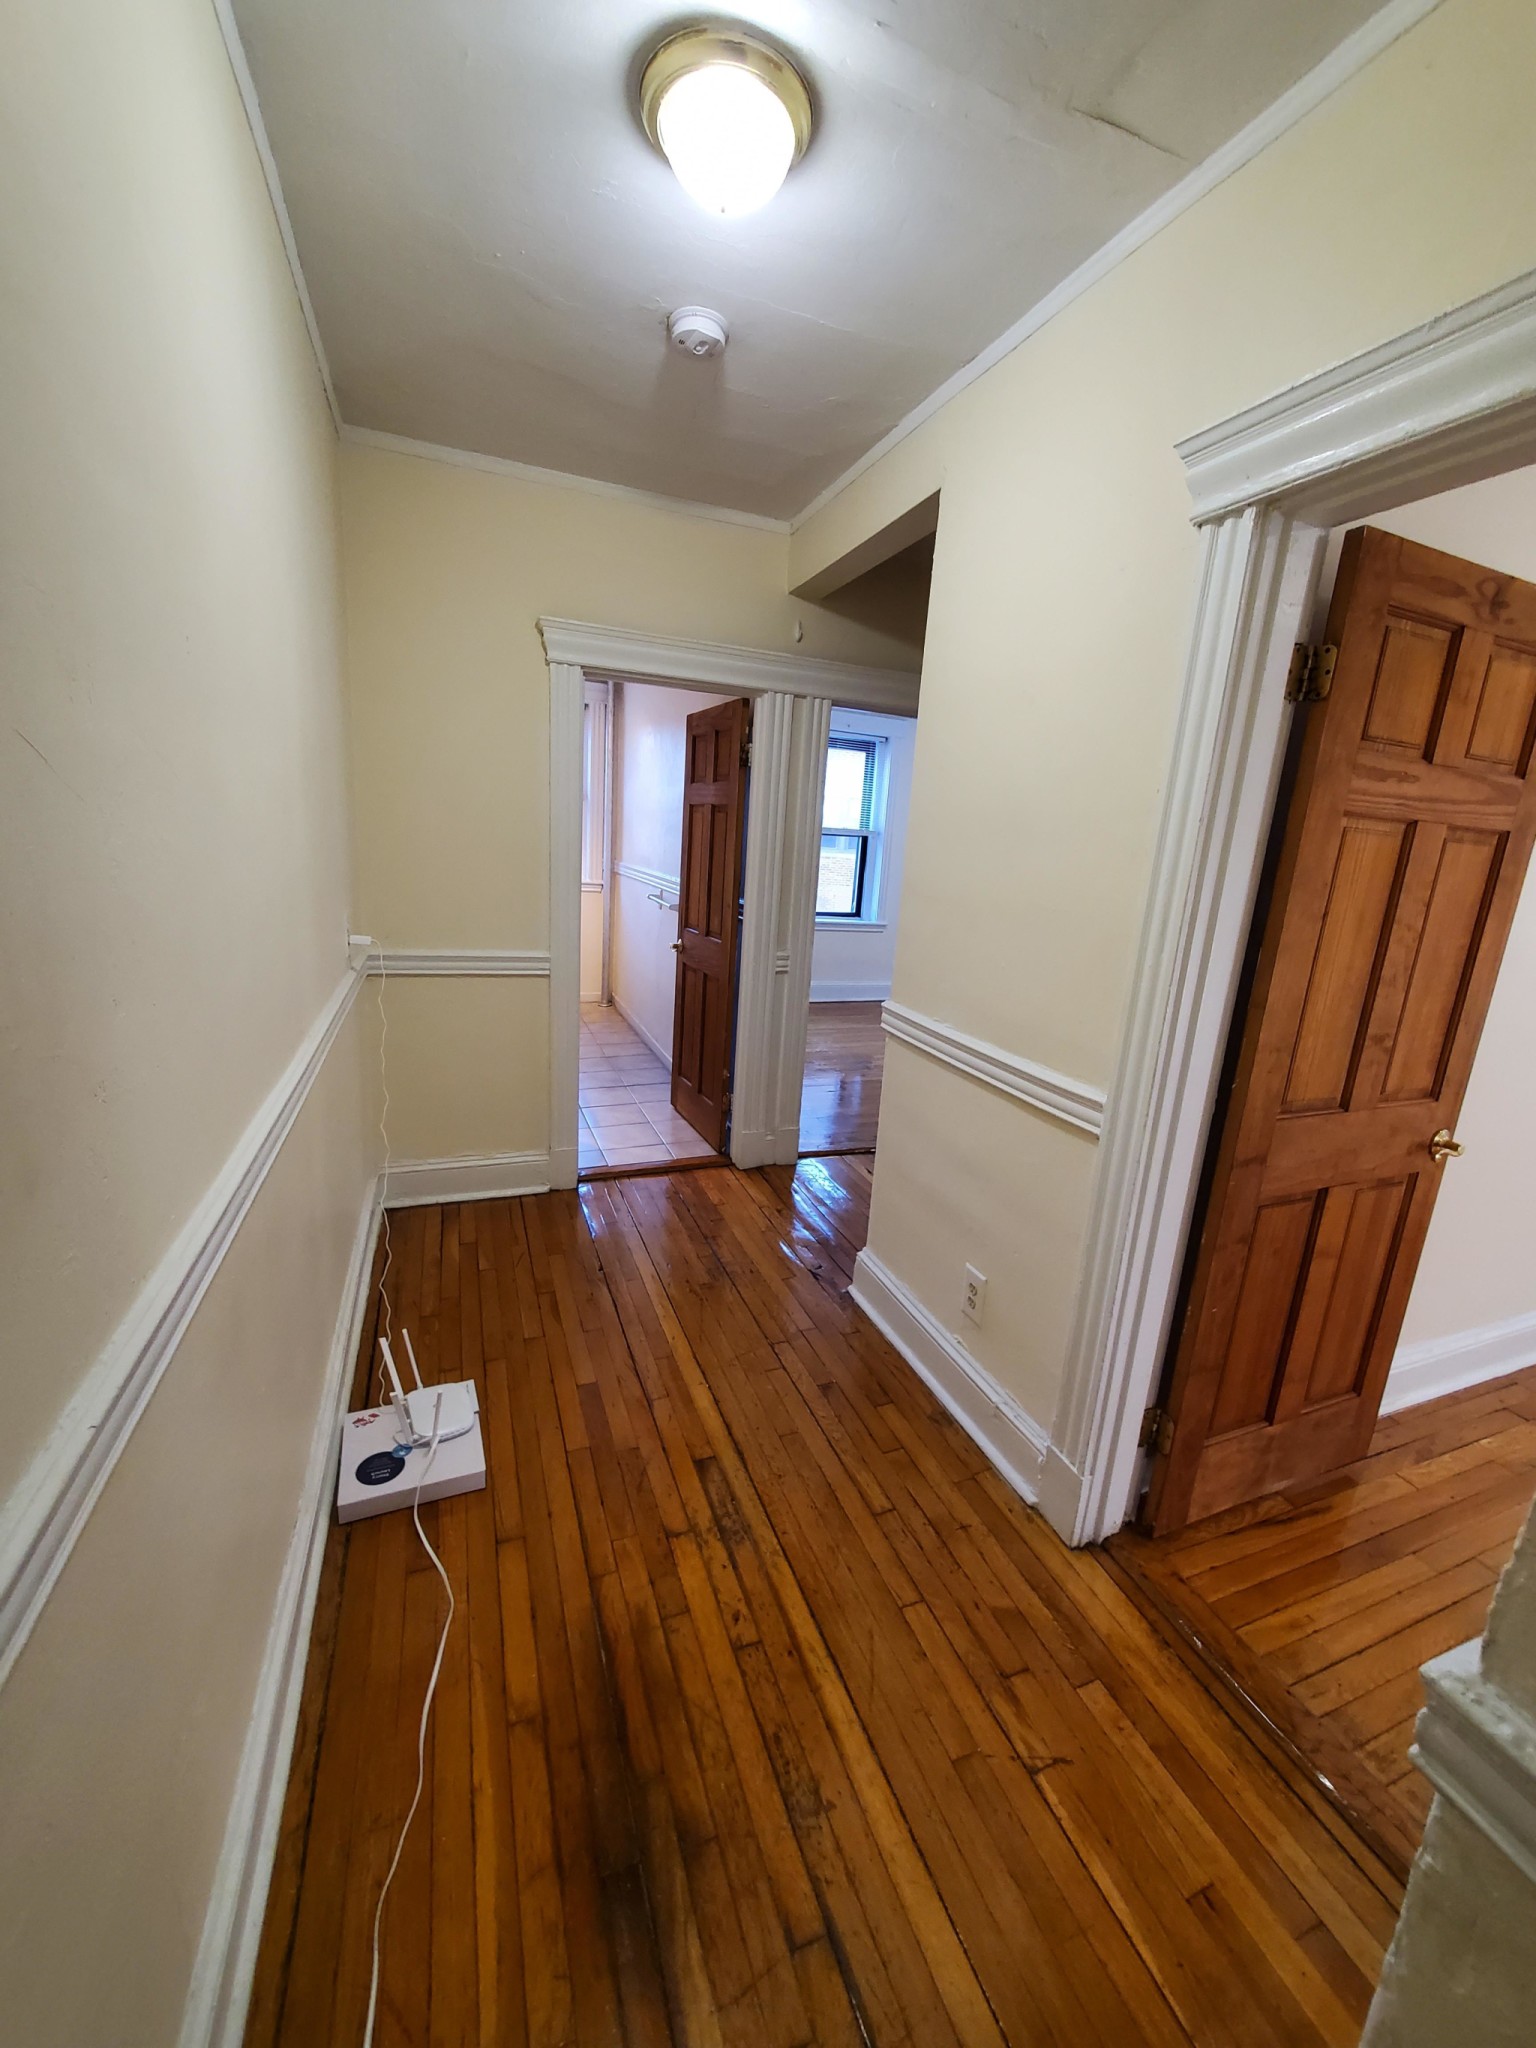 Photos of apartment on Commonwealth,Boston MA 02115